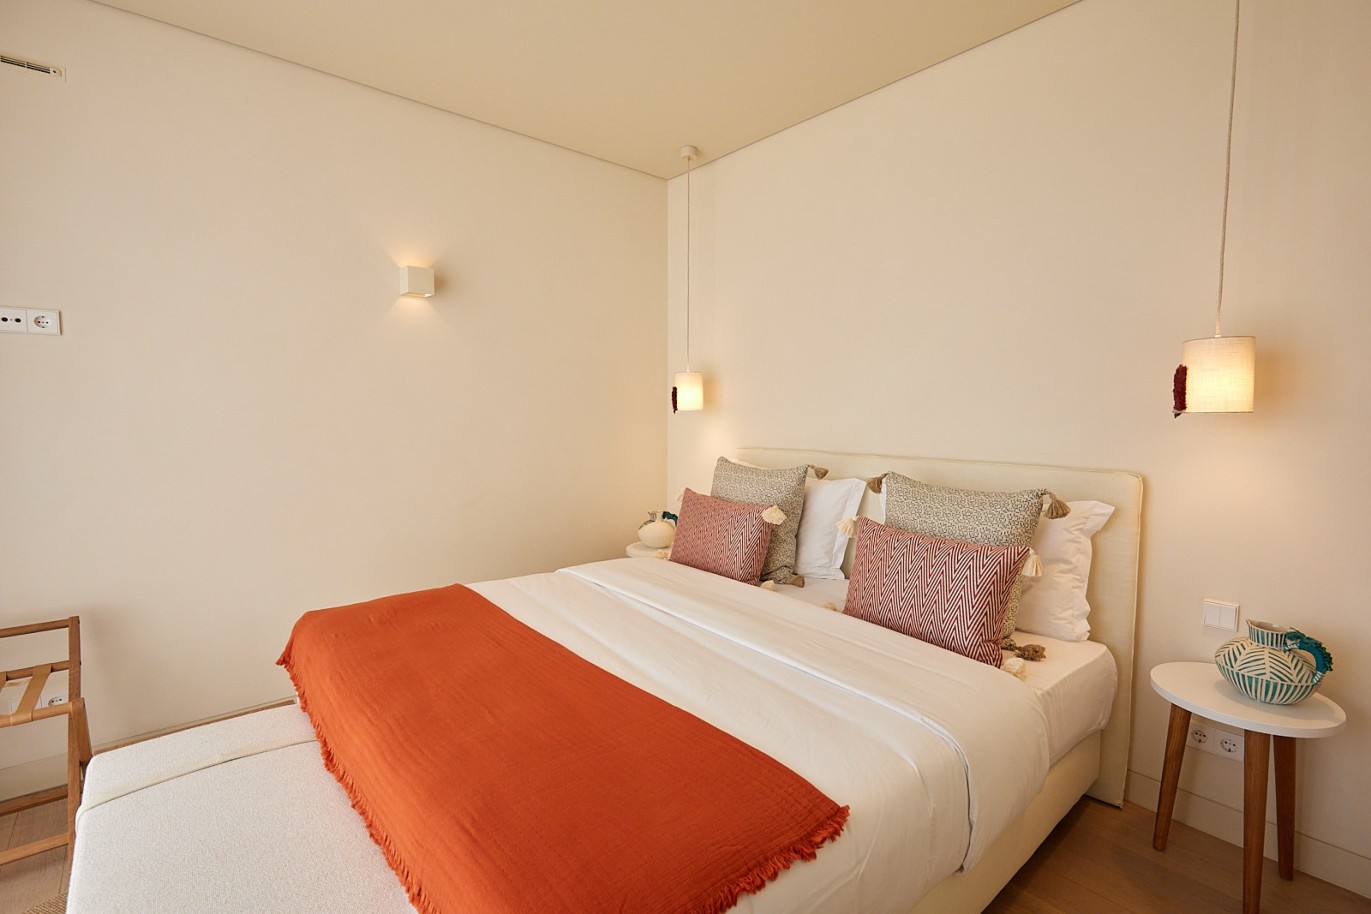 2 bedroom apartment in resort, for sale in Porches, Algarve_229227